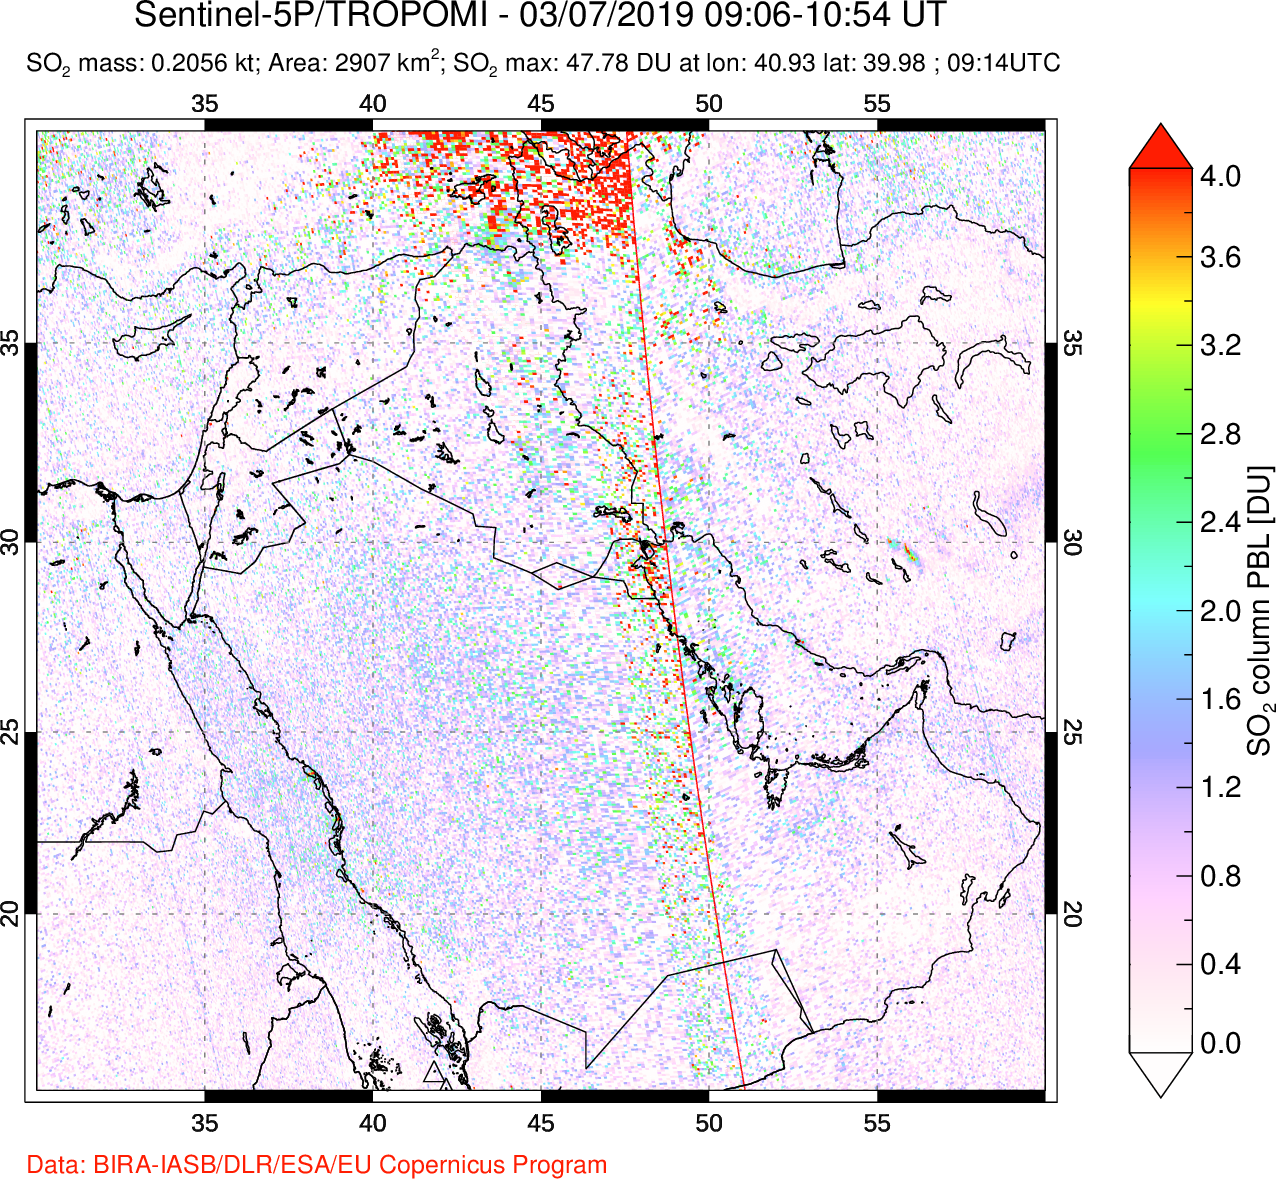 A sulfur dioxide image over Middle East on Mar 07, 2019.